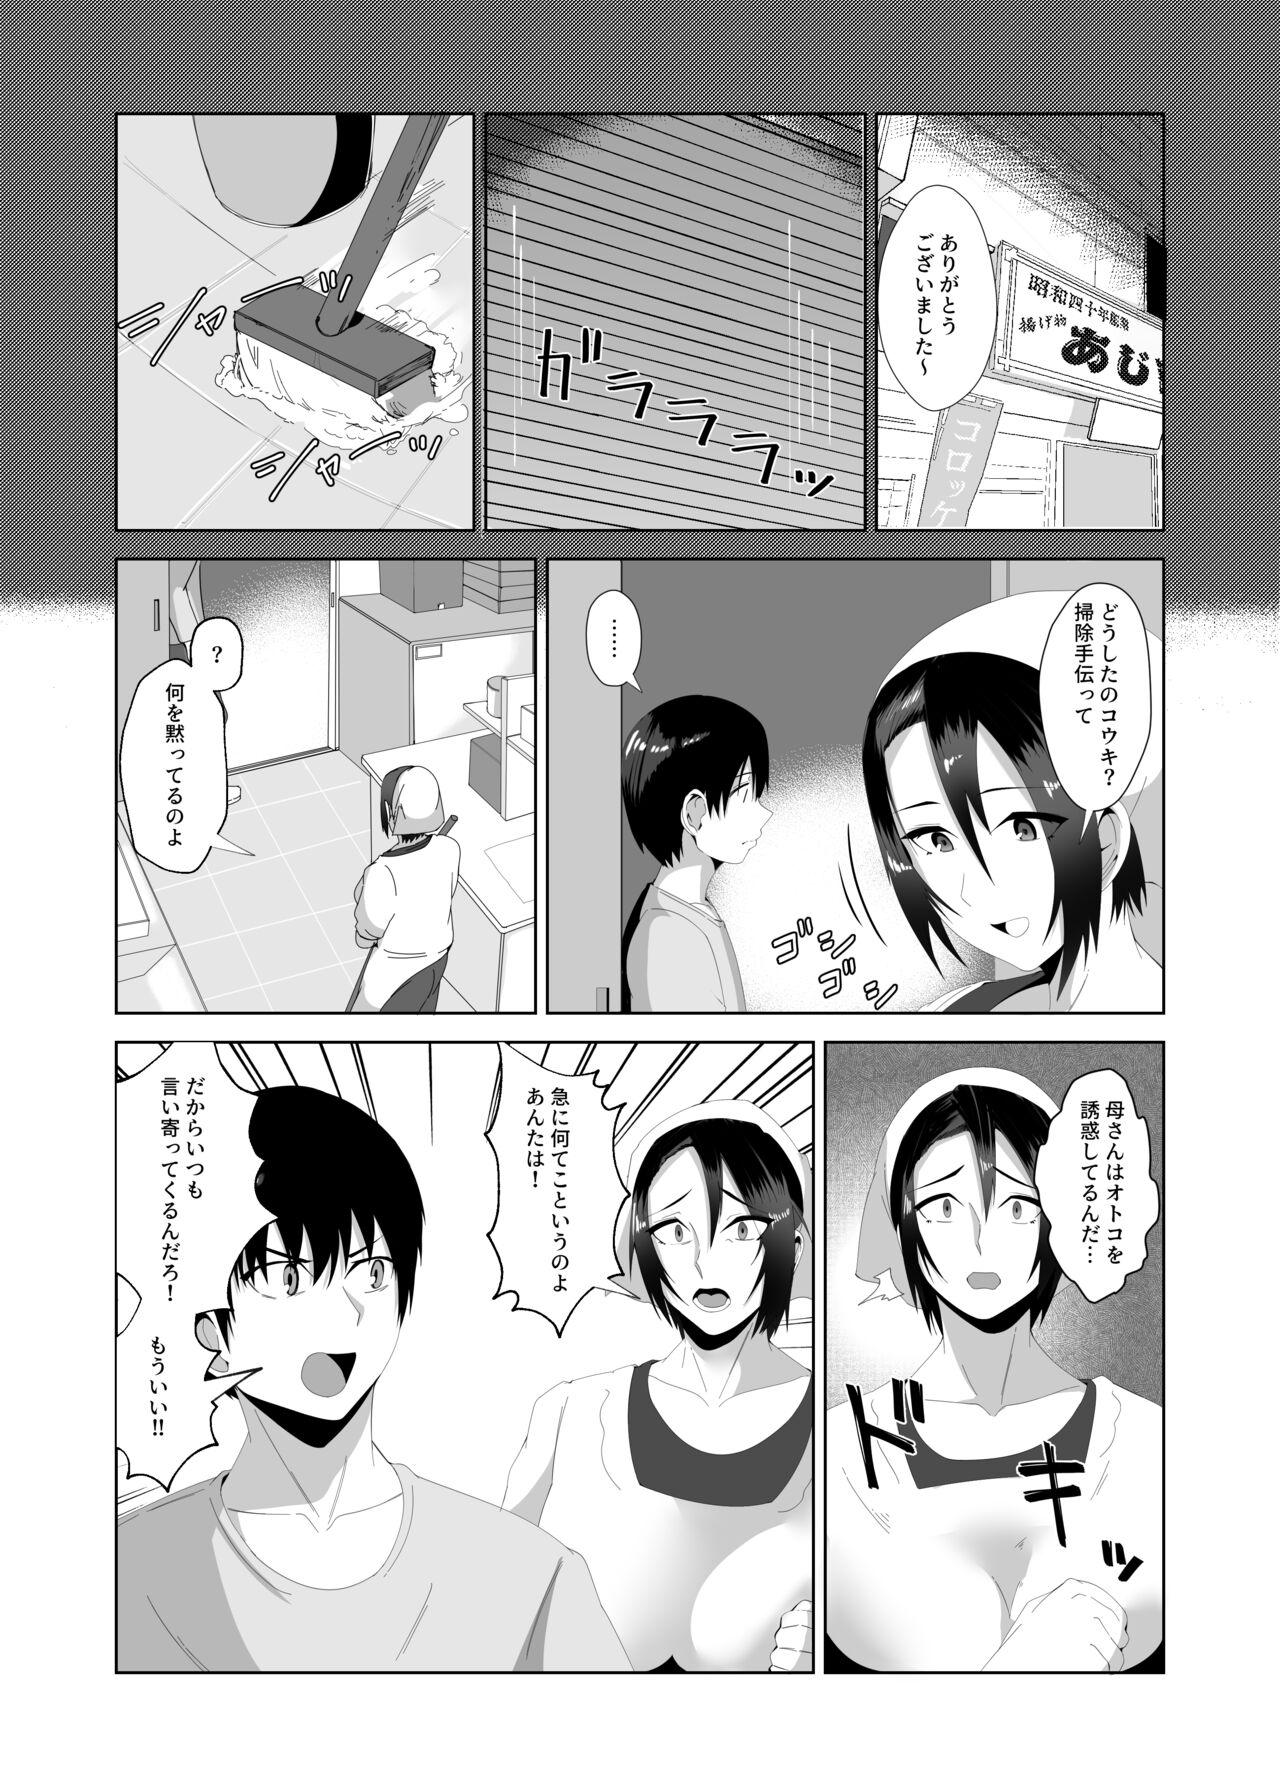 T Girl Kaasanwa kanbanmusume nikuyokuni kogaretaboshino futsuya Bdsm - Page 3